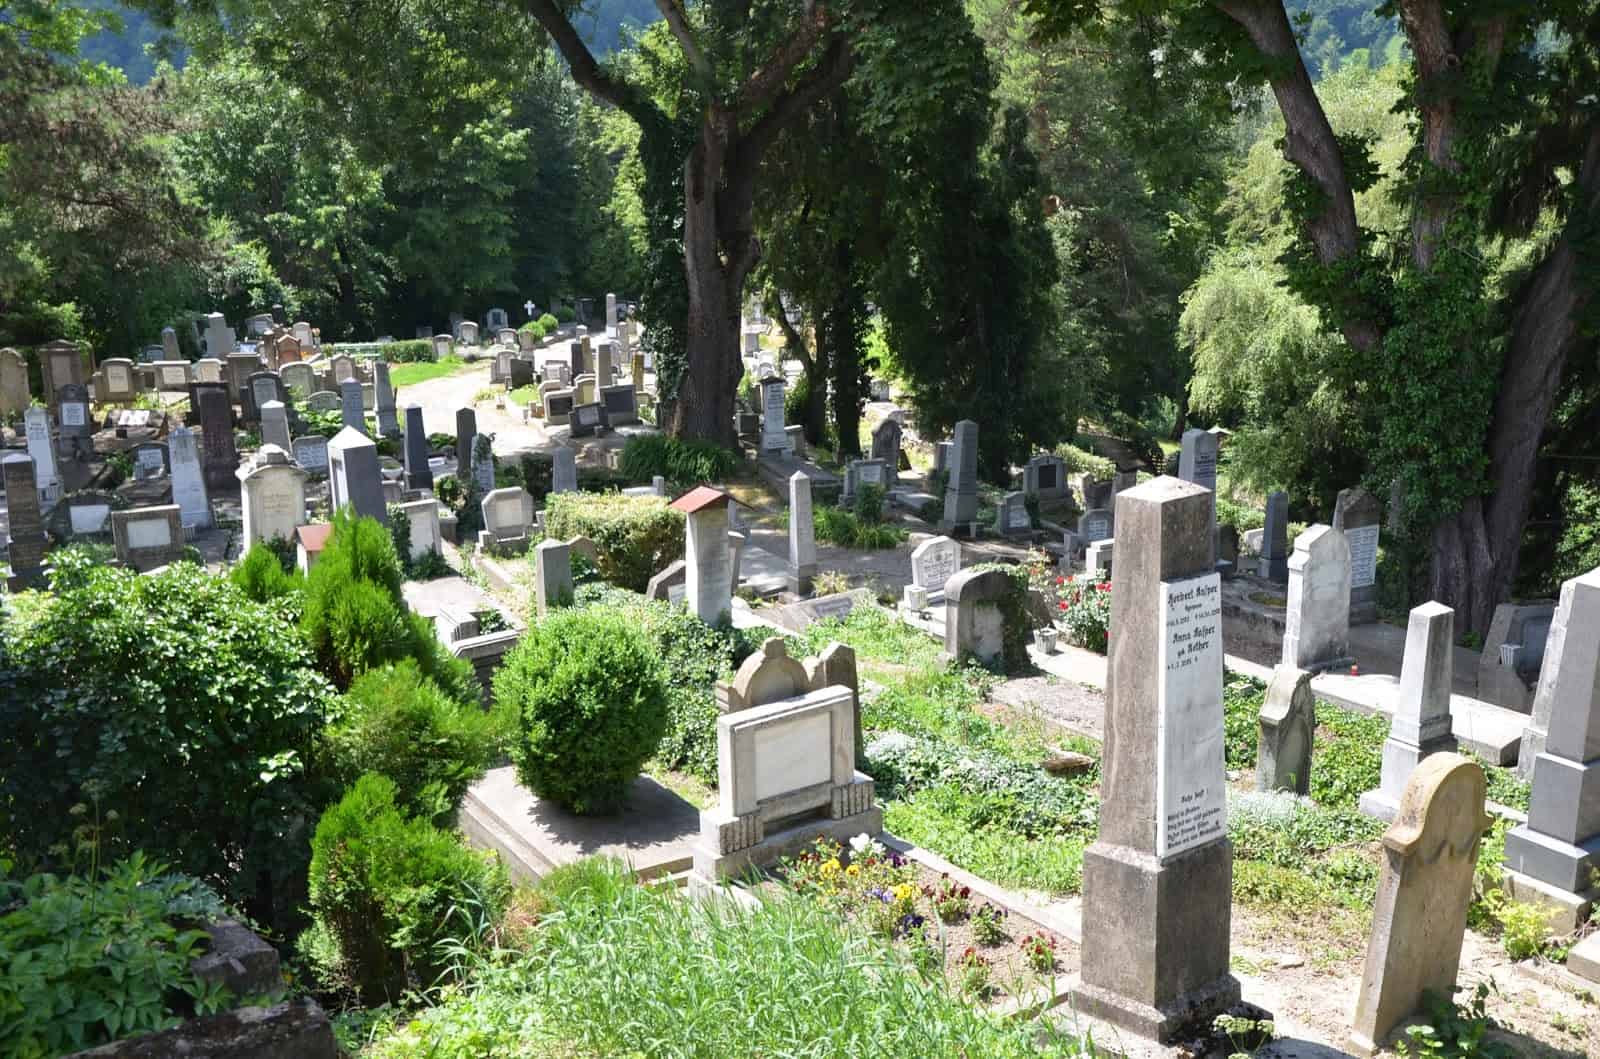 German cemetery in Sighişoara, Romania